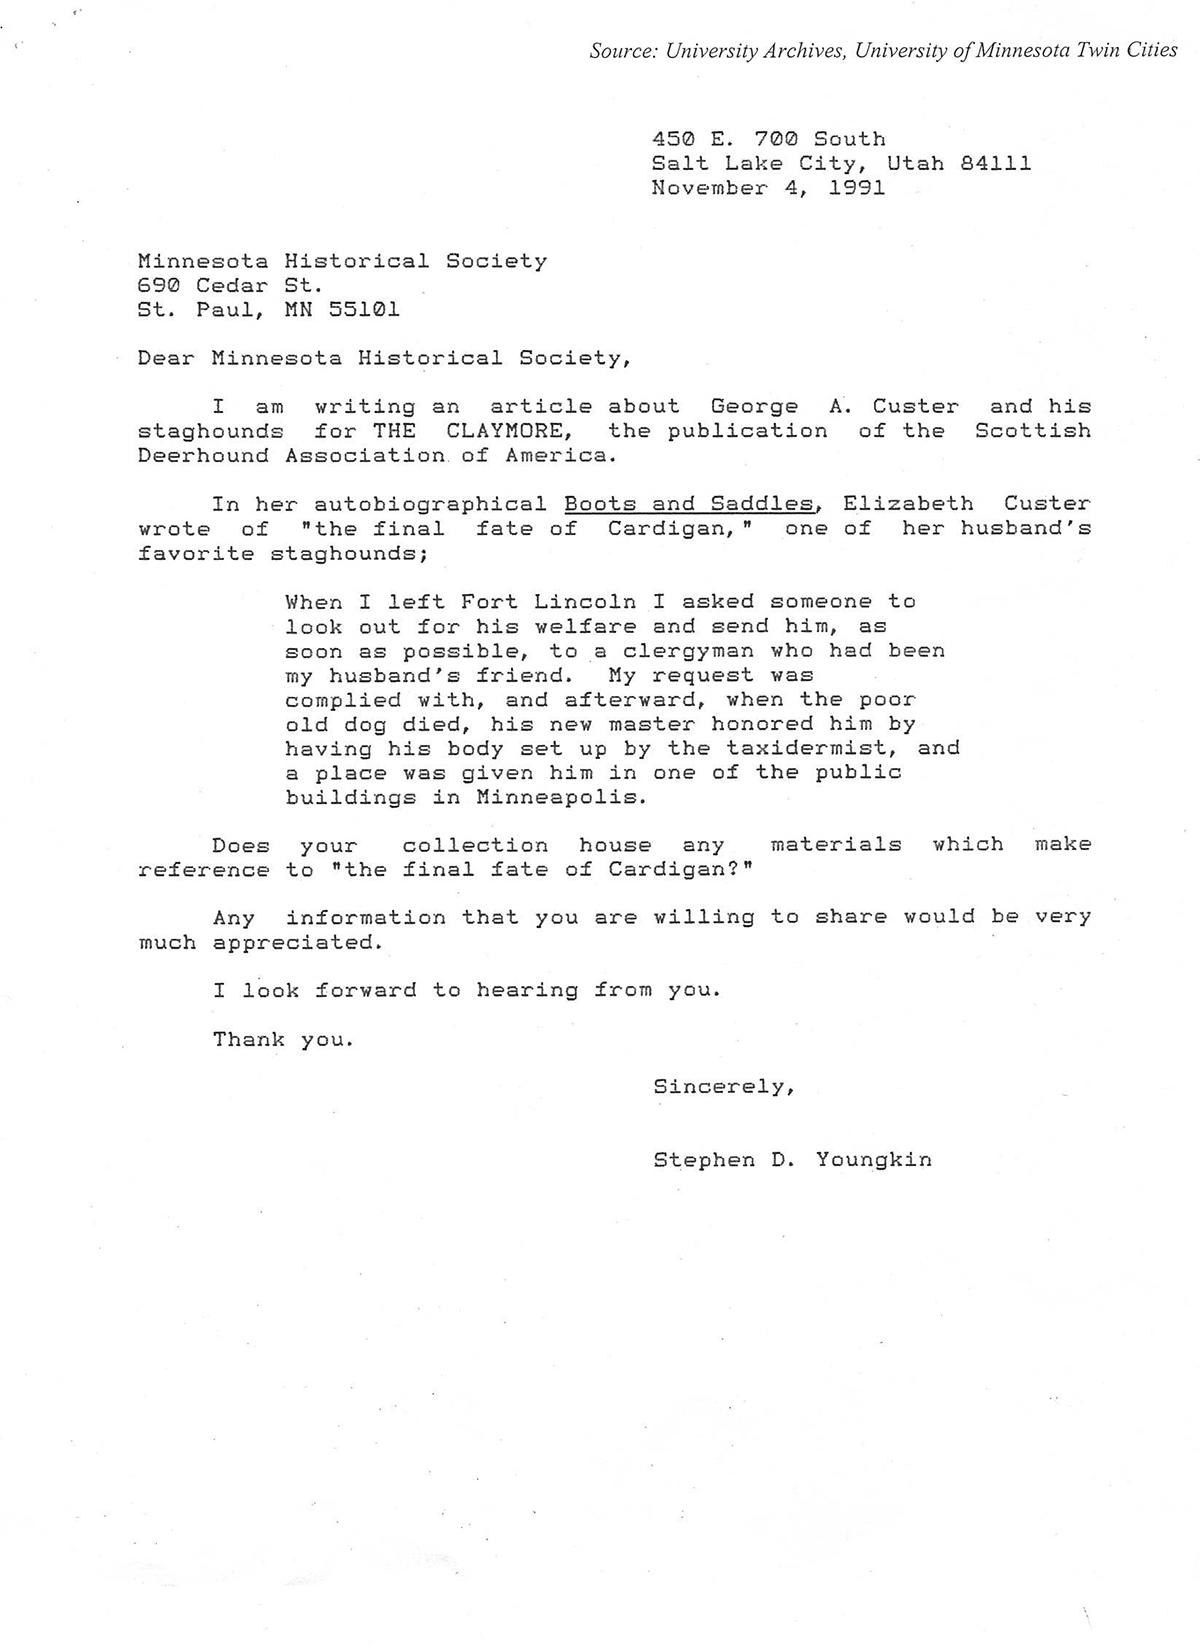 Youngkin's letter to Minnesota Historical Society - November 4, 1991